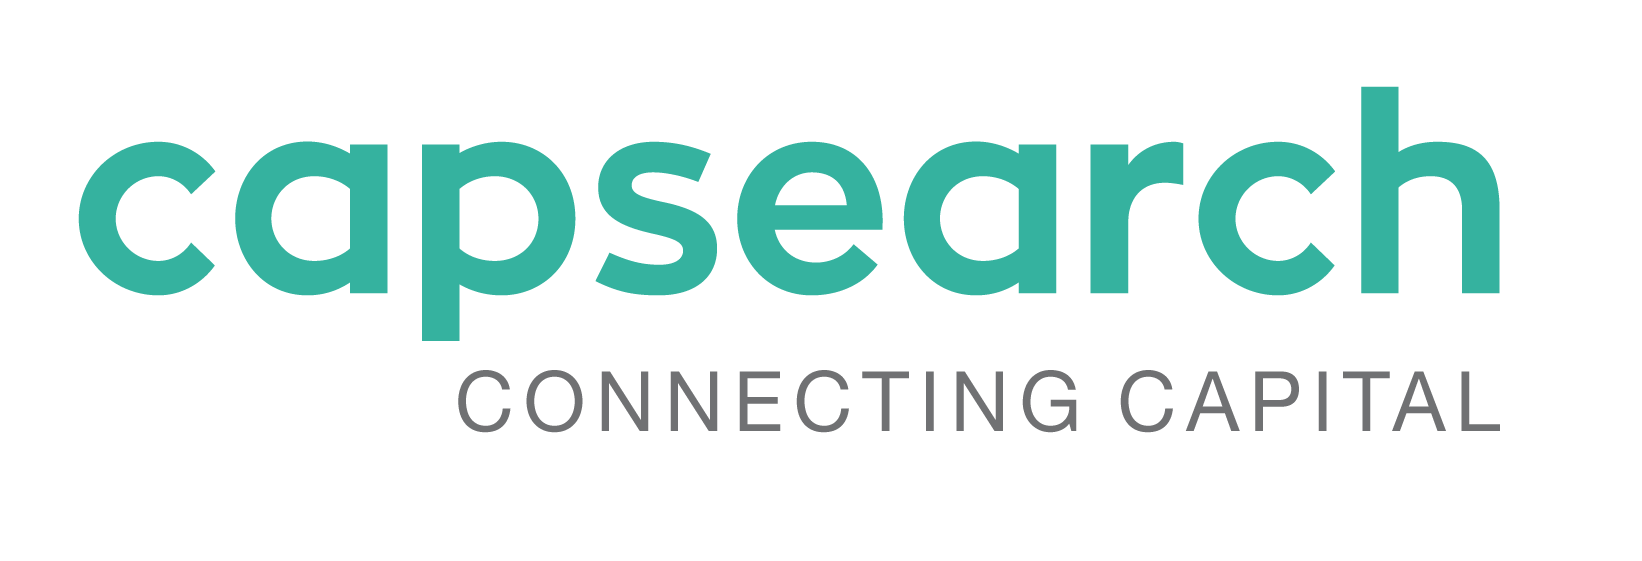 capsearch logo